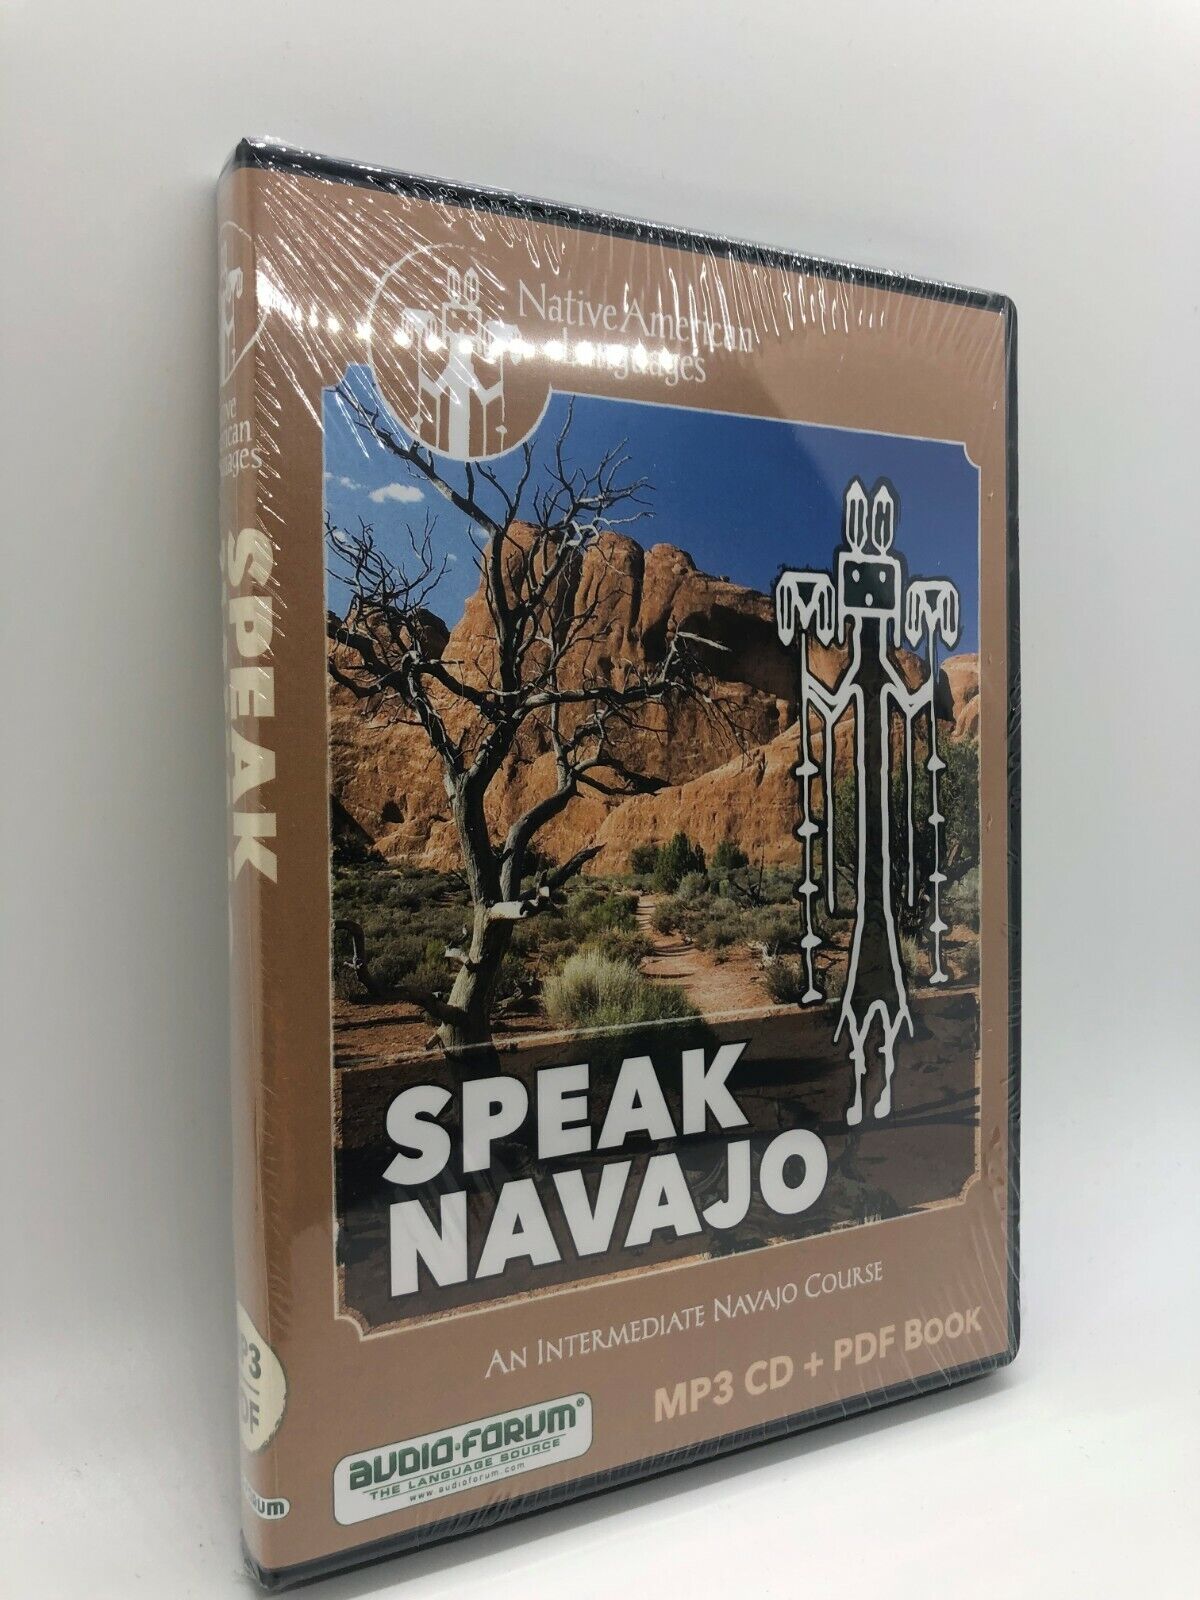 Speak Navajo (PC/MAC) by Audio-Forum 